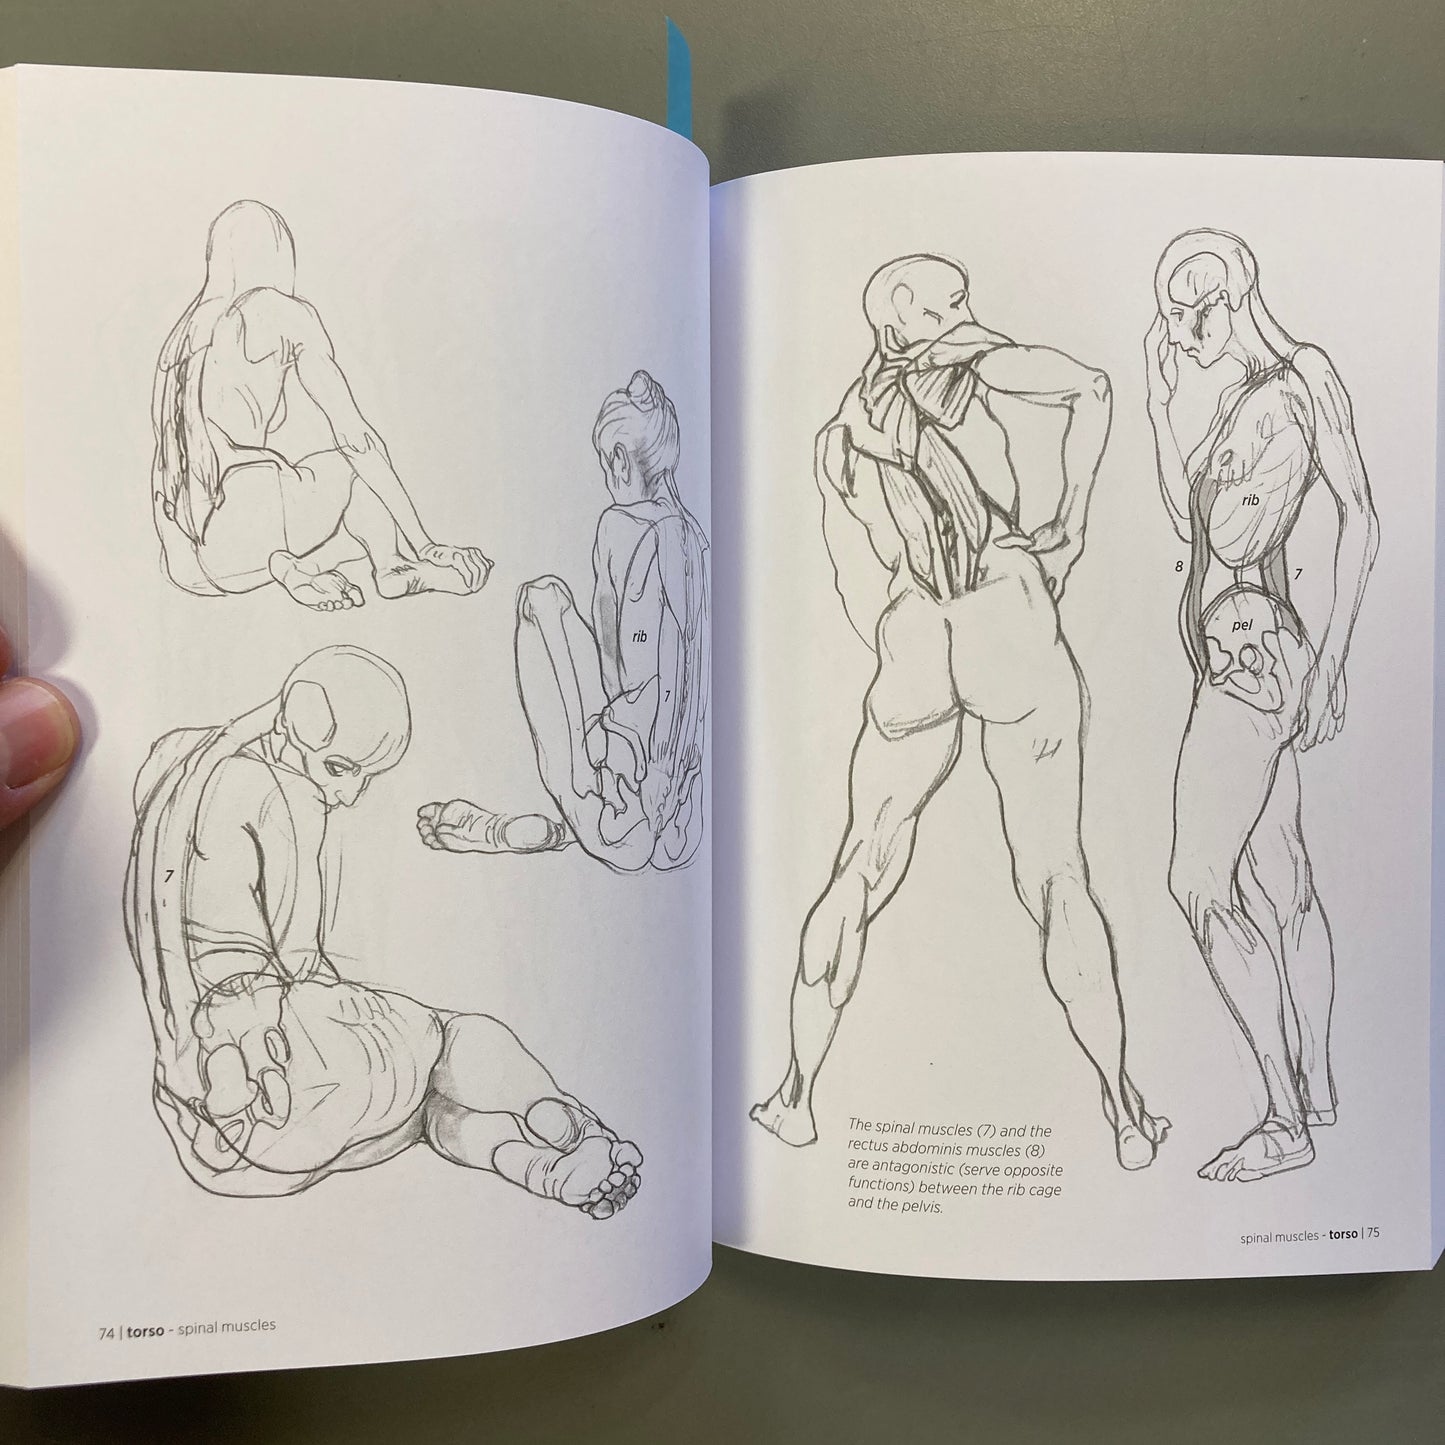 Morpho: Anatomy for Artists